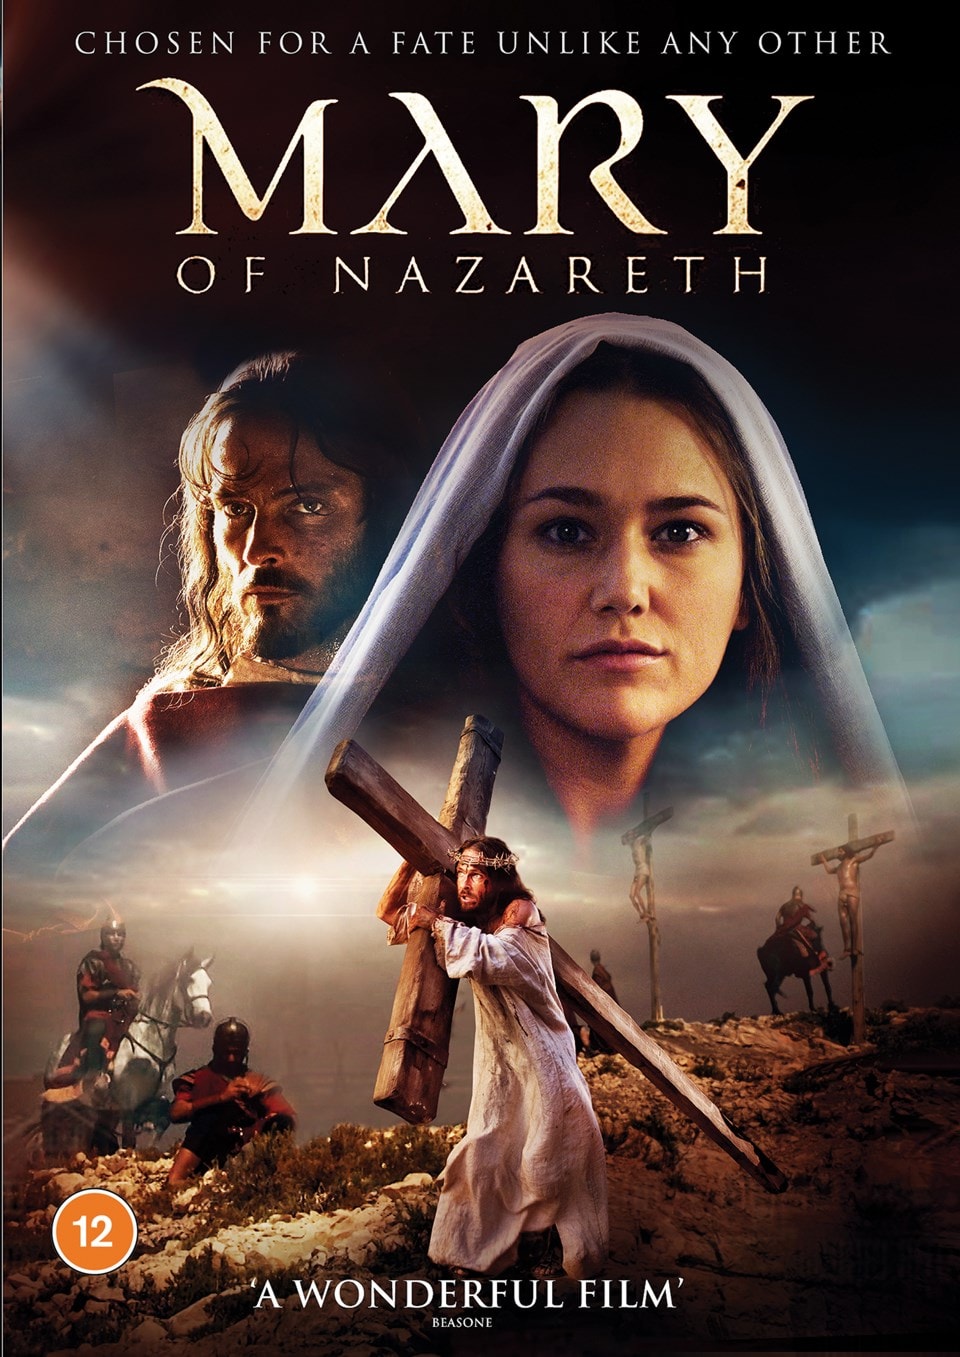 Mary of Nazareth | DVD | Free shipping over £20 | HMV Store